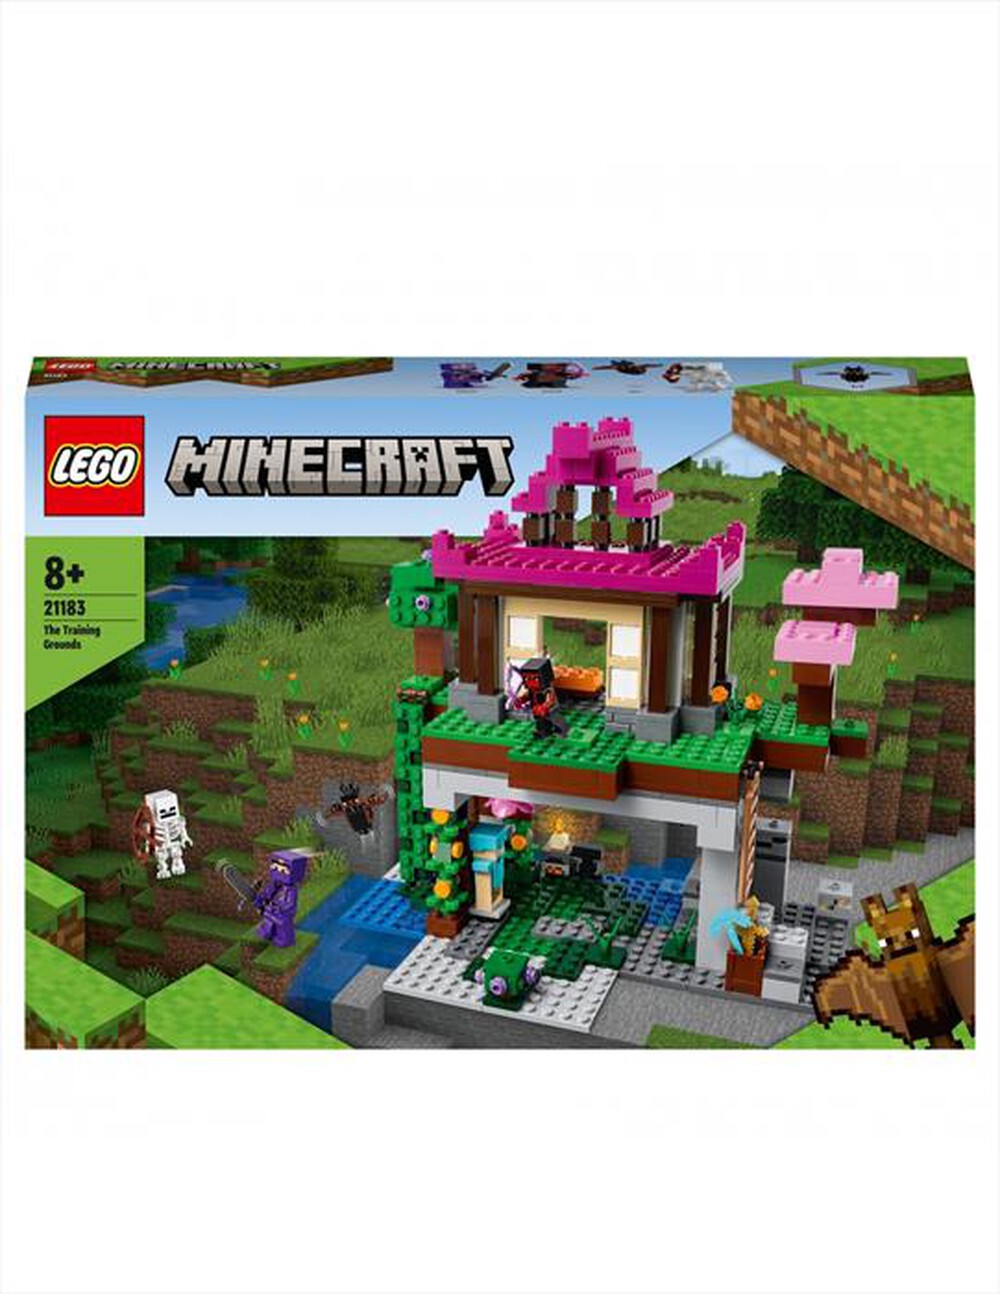 "LEGO - MINECRAFT I CAMPI D'ALLENAMENTO - 21183"